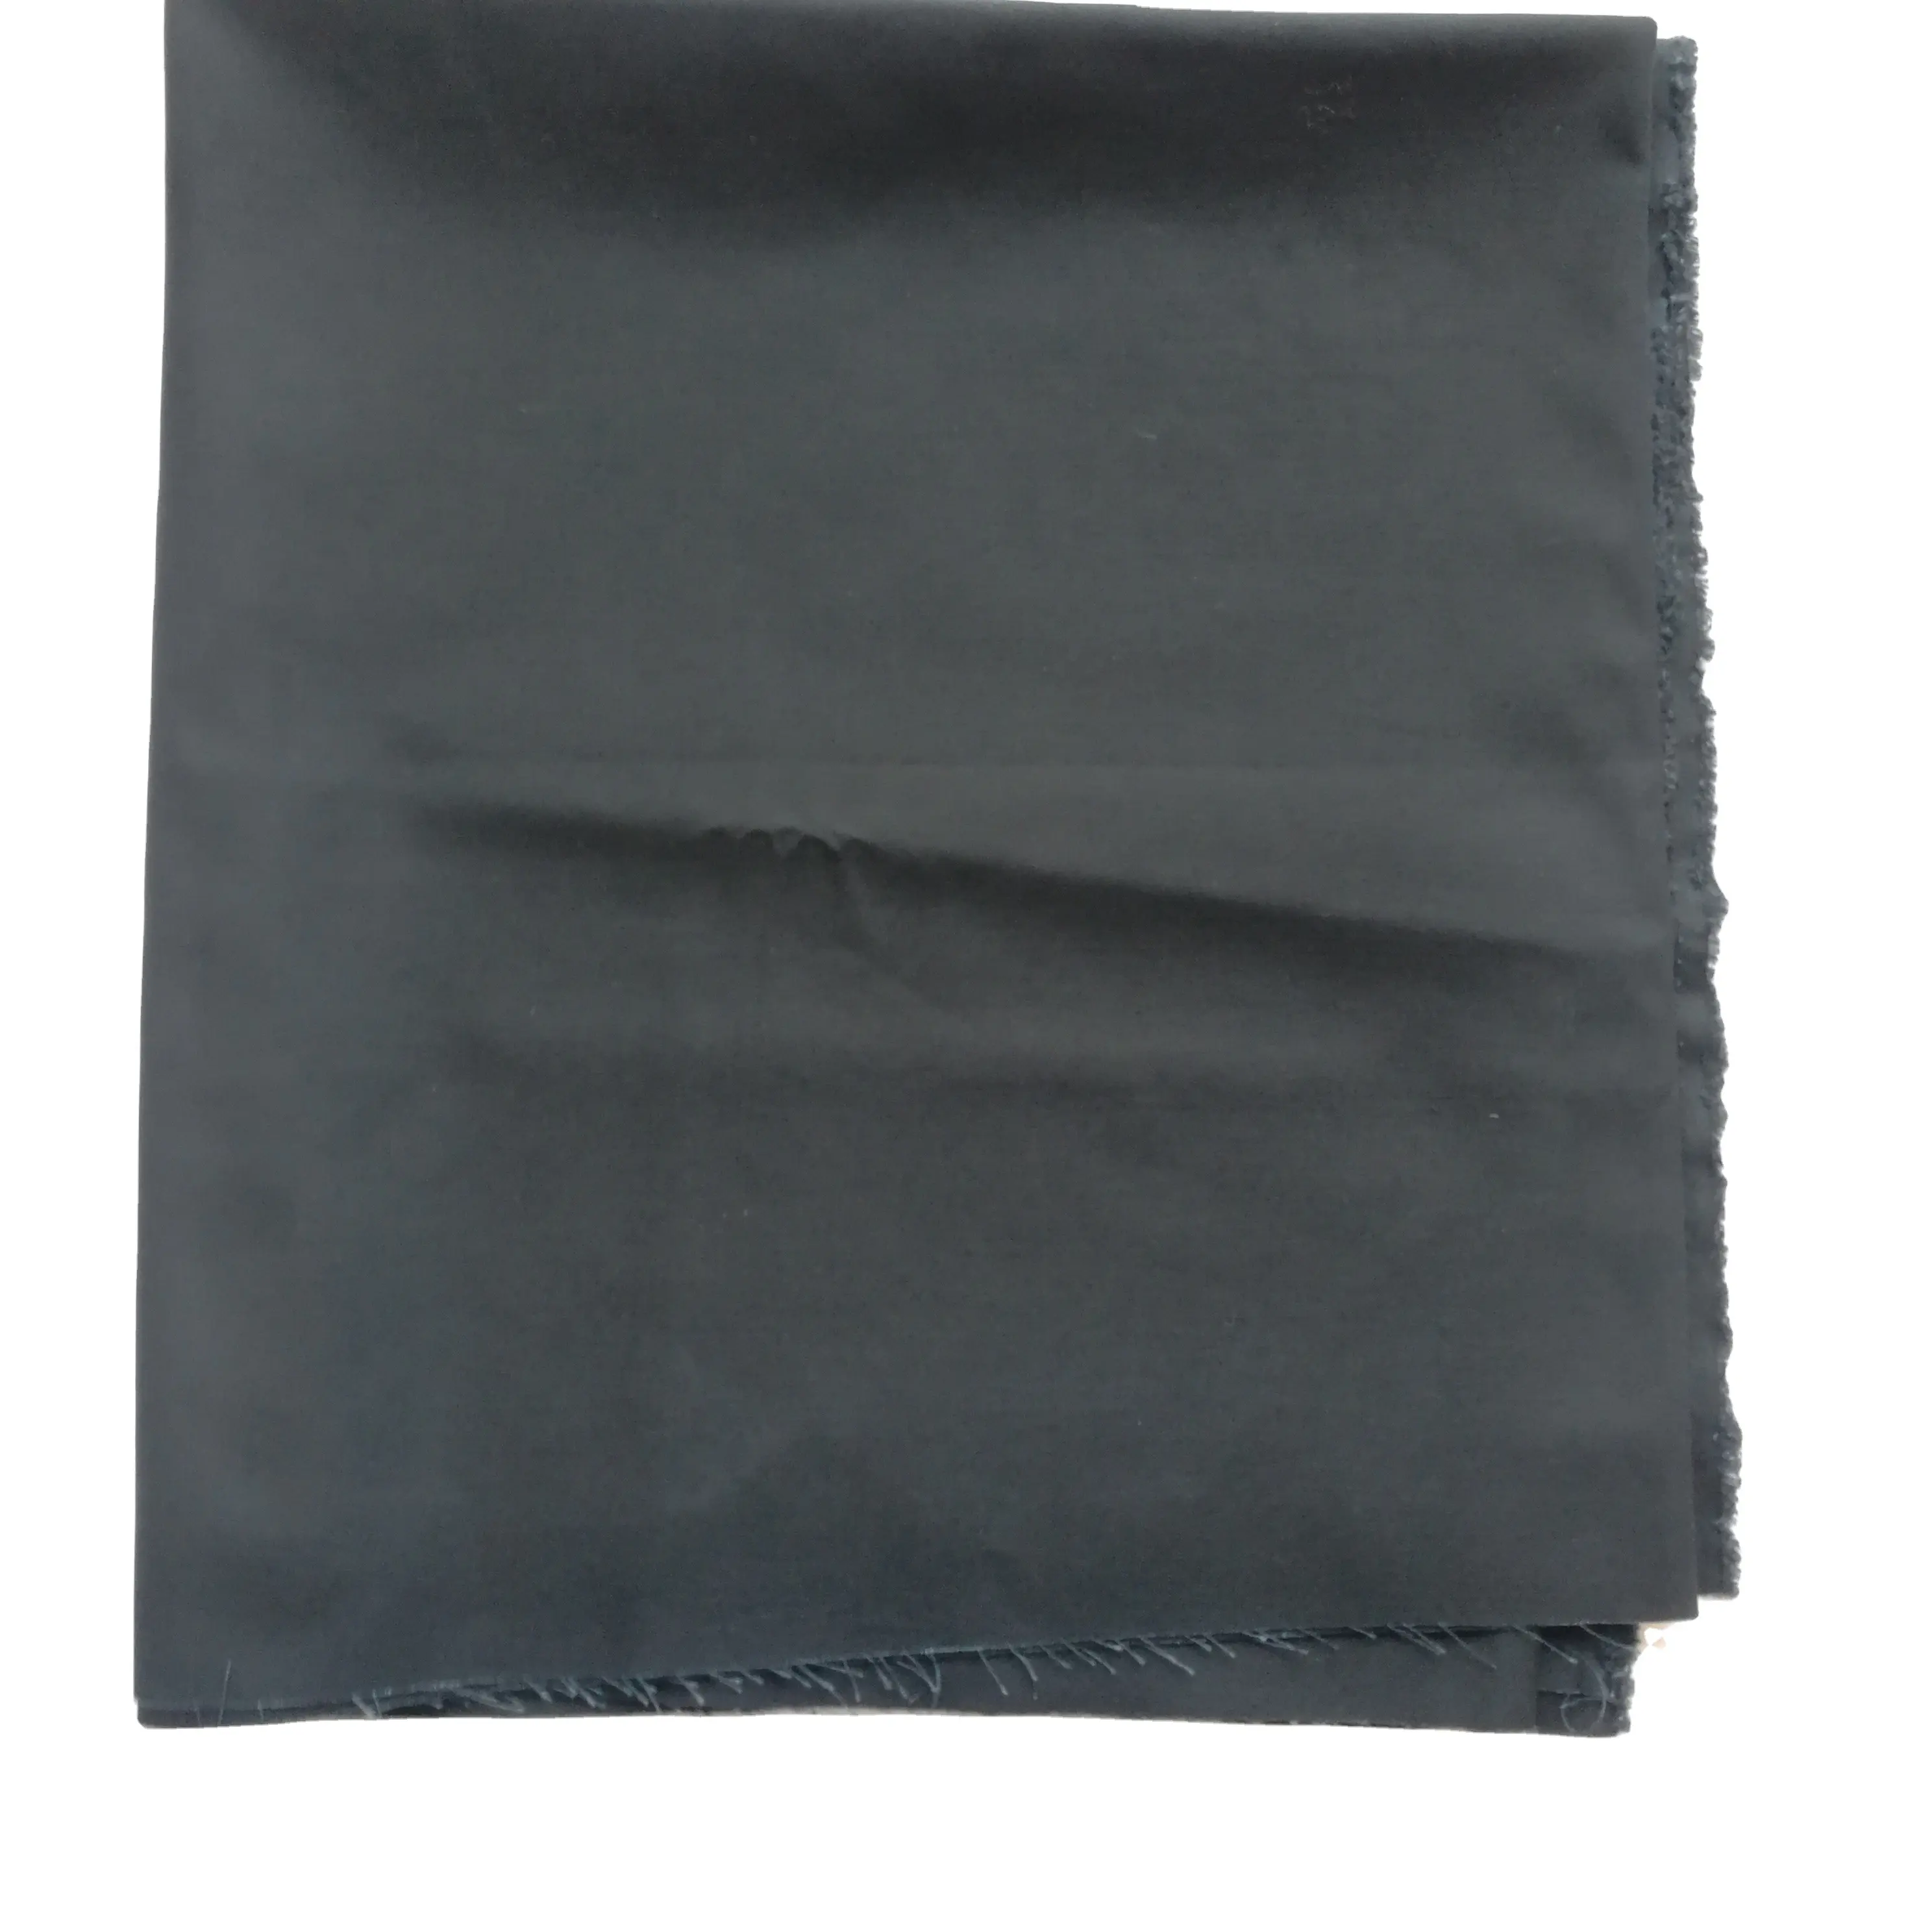 Organic cotton twill plain uniform fabricfabric Fresh TC fabric for workwear uniform bag